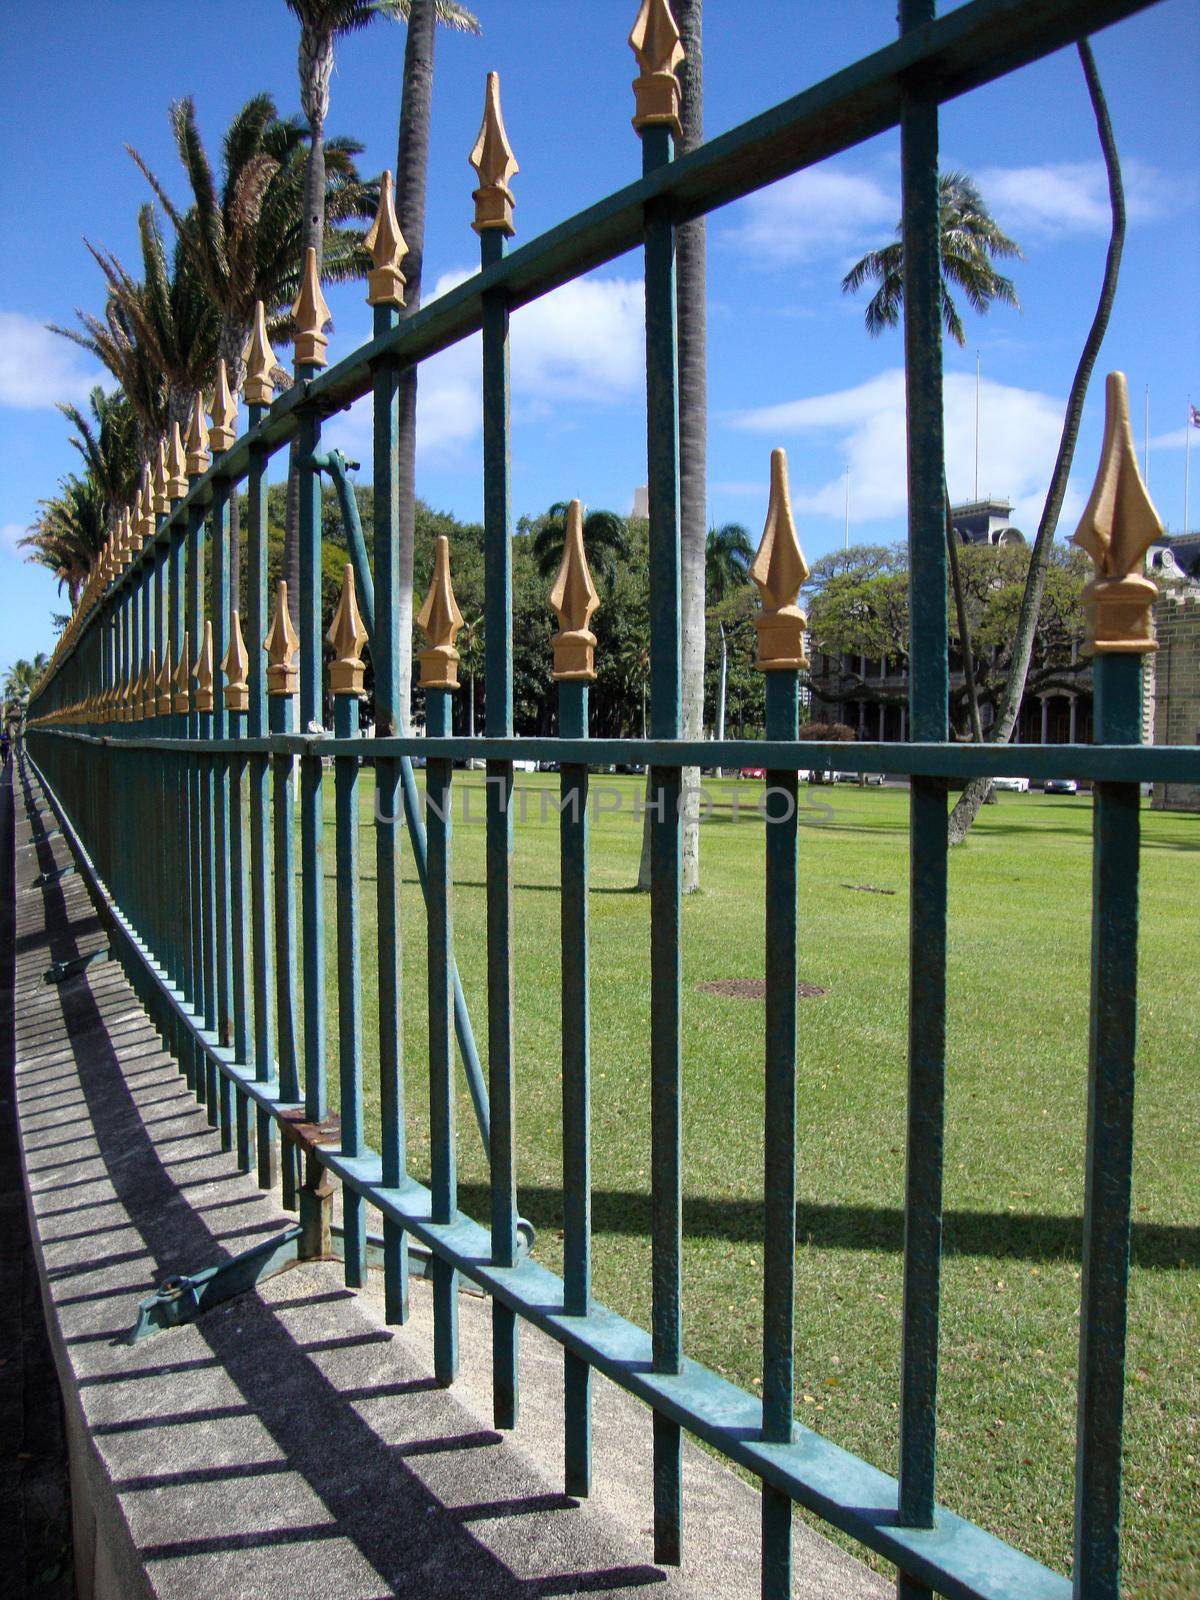 Iolani Palace Fence by EricGBVD